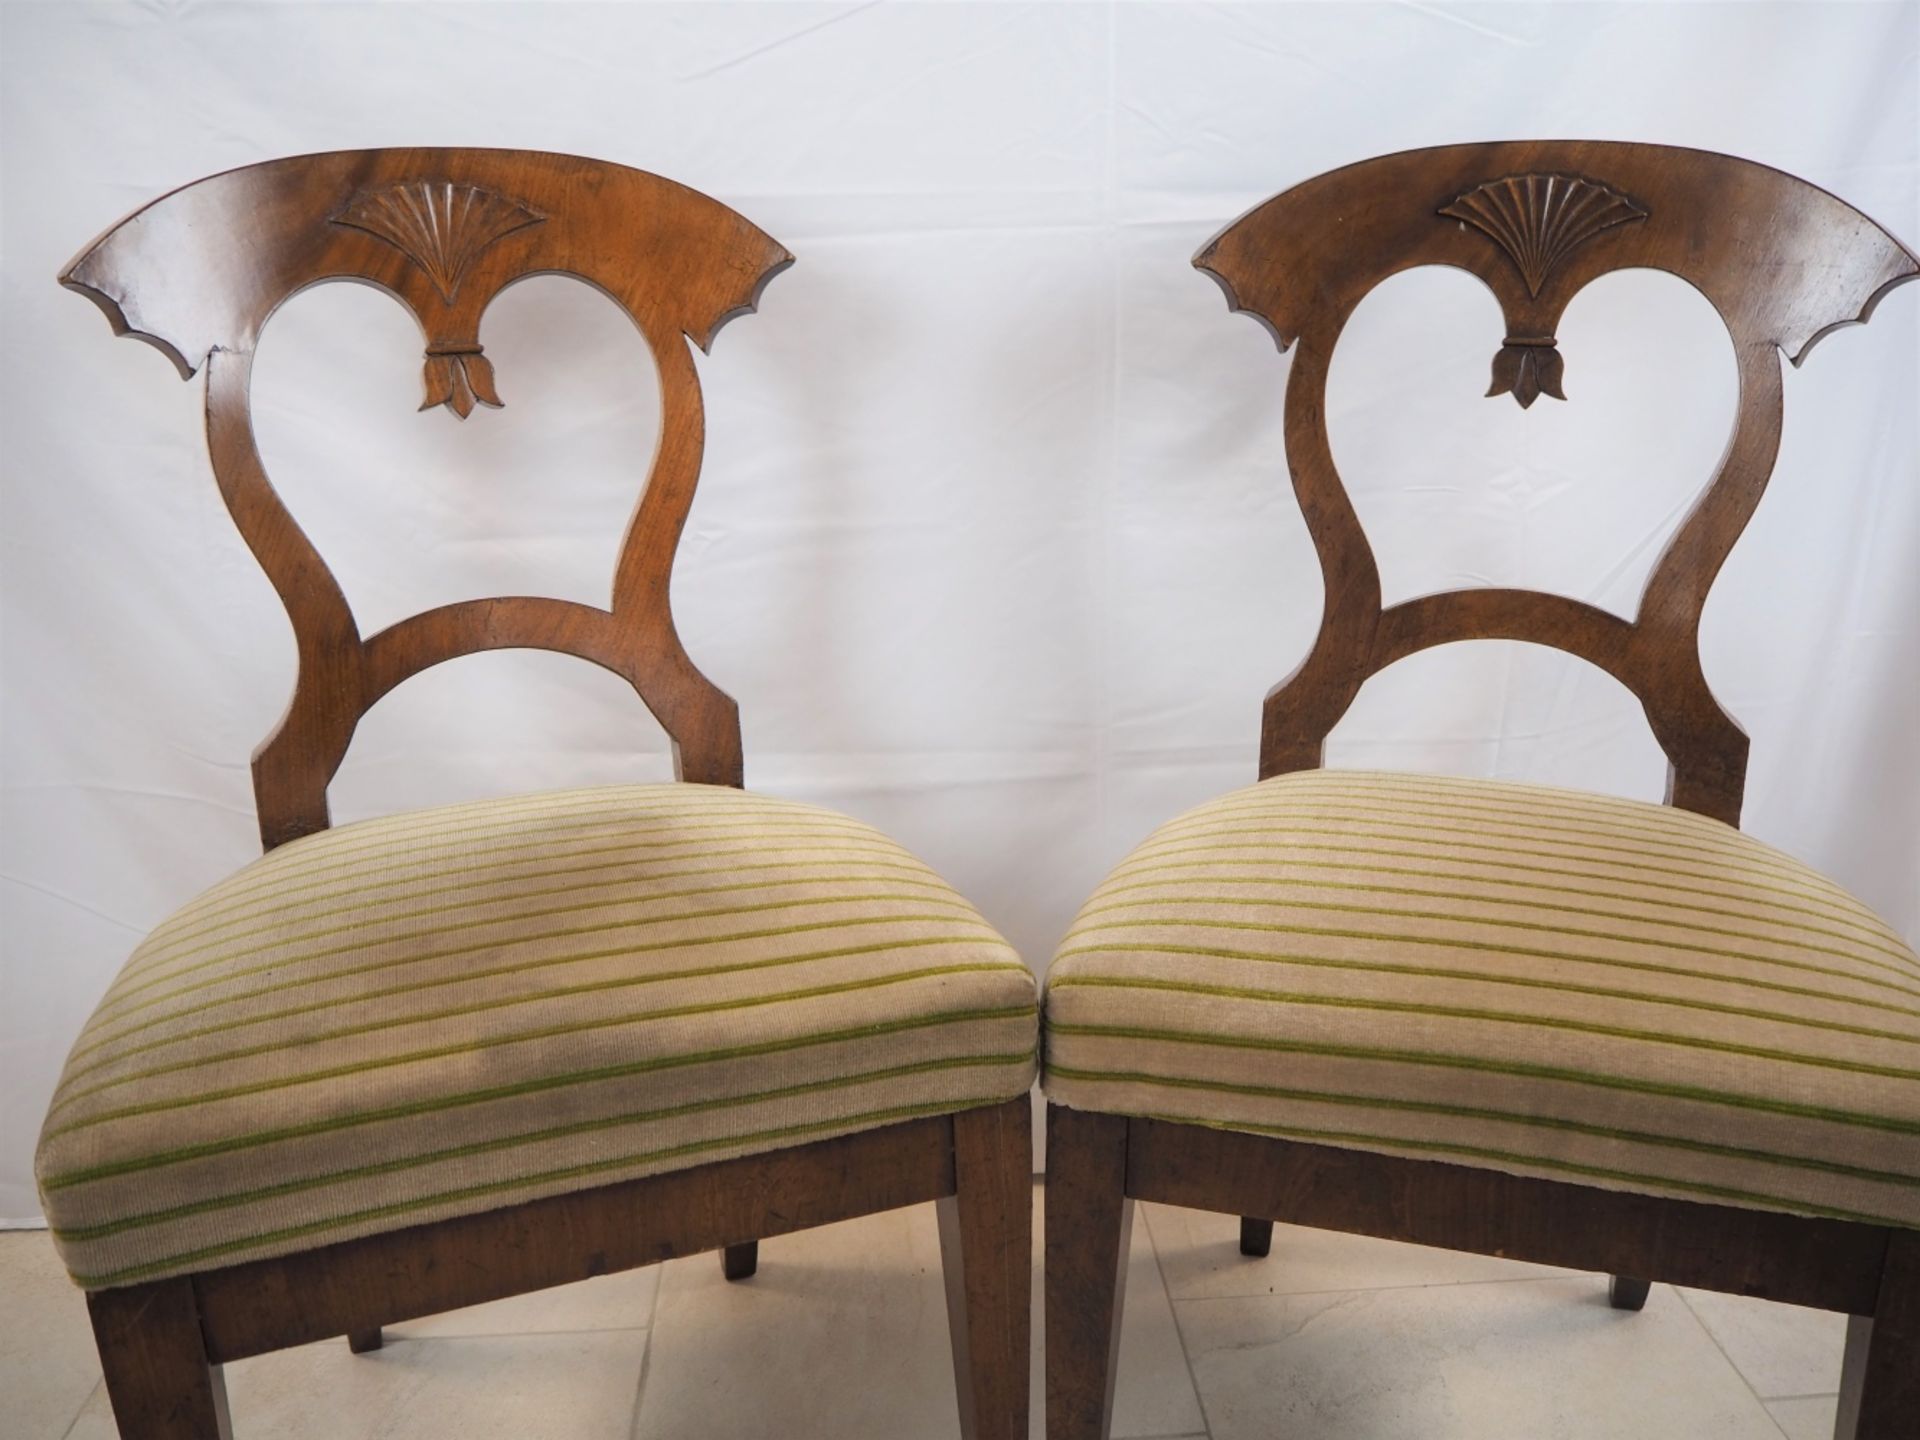 A pair of Biedermeier chairs, Middle German around 1830 - Image 2 of 5